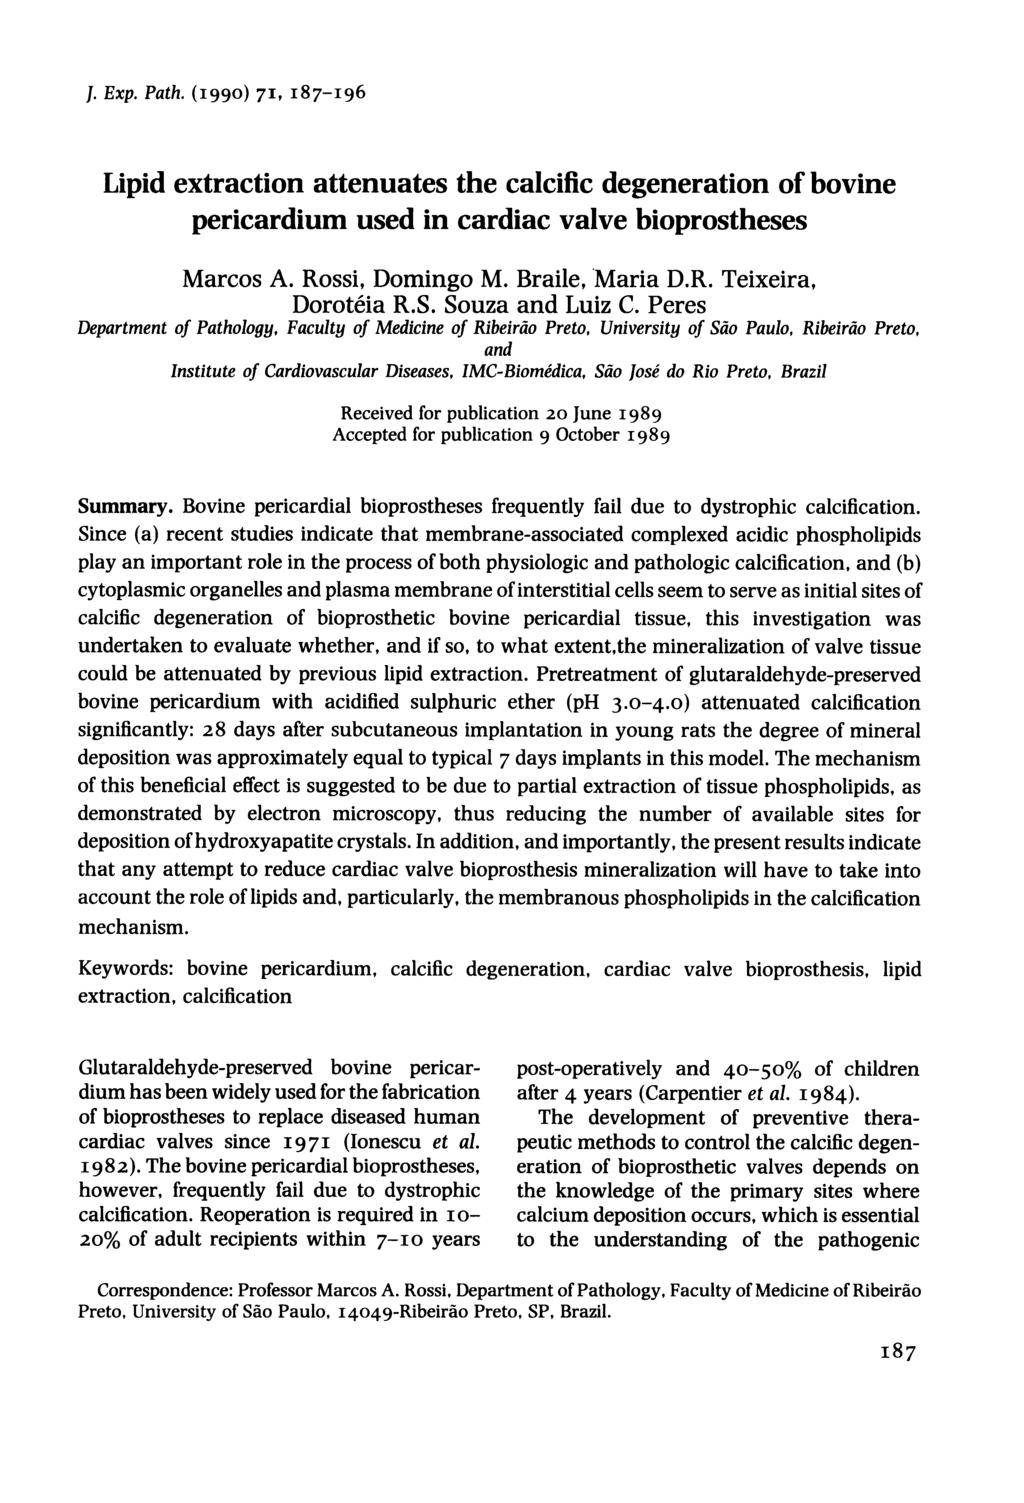 J. Exp. Path. (1990) 71, I87-196 Lipid extraction attenuates the calcific degeneration of bovine pericardium used in cardiac valve bioprostheses Marcos A. Rossi, Domingo M. Braile, Maria D.R. Teixeira, Doroteia R.